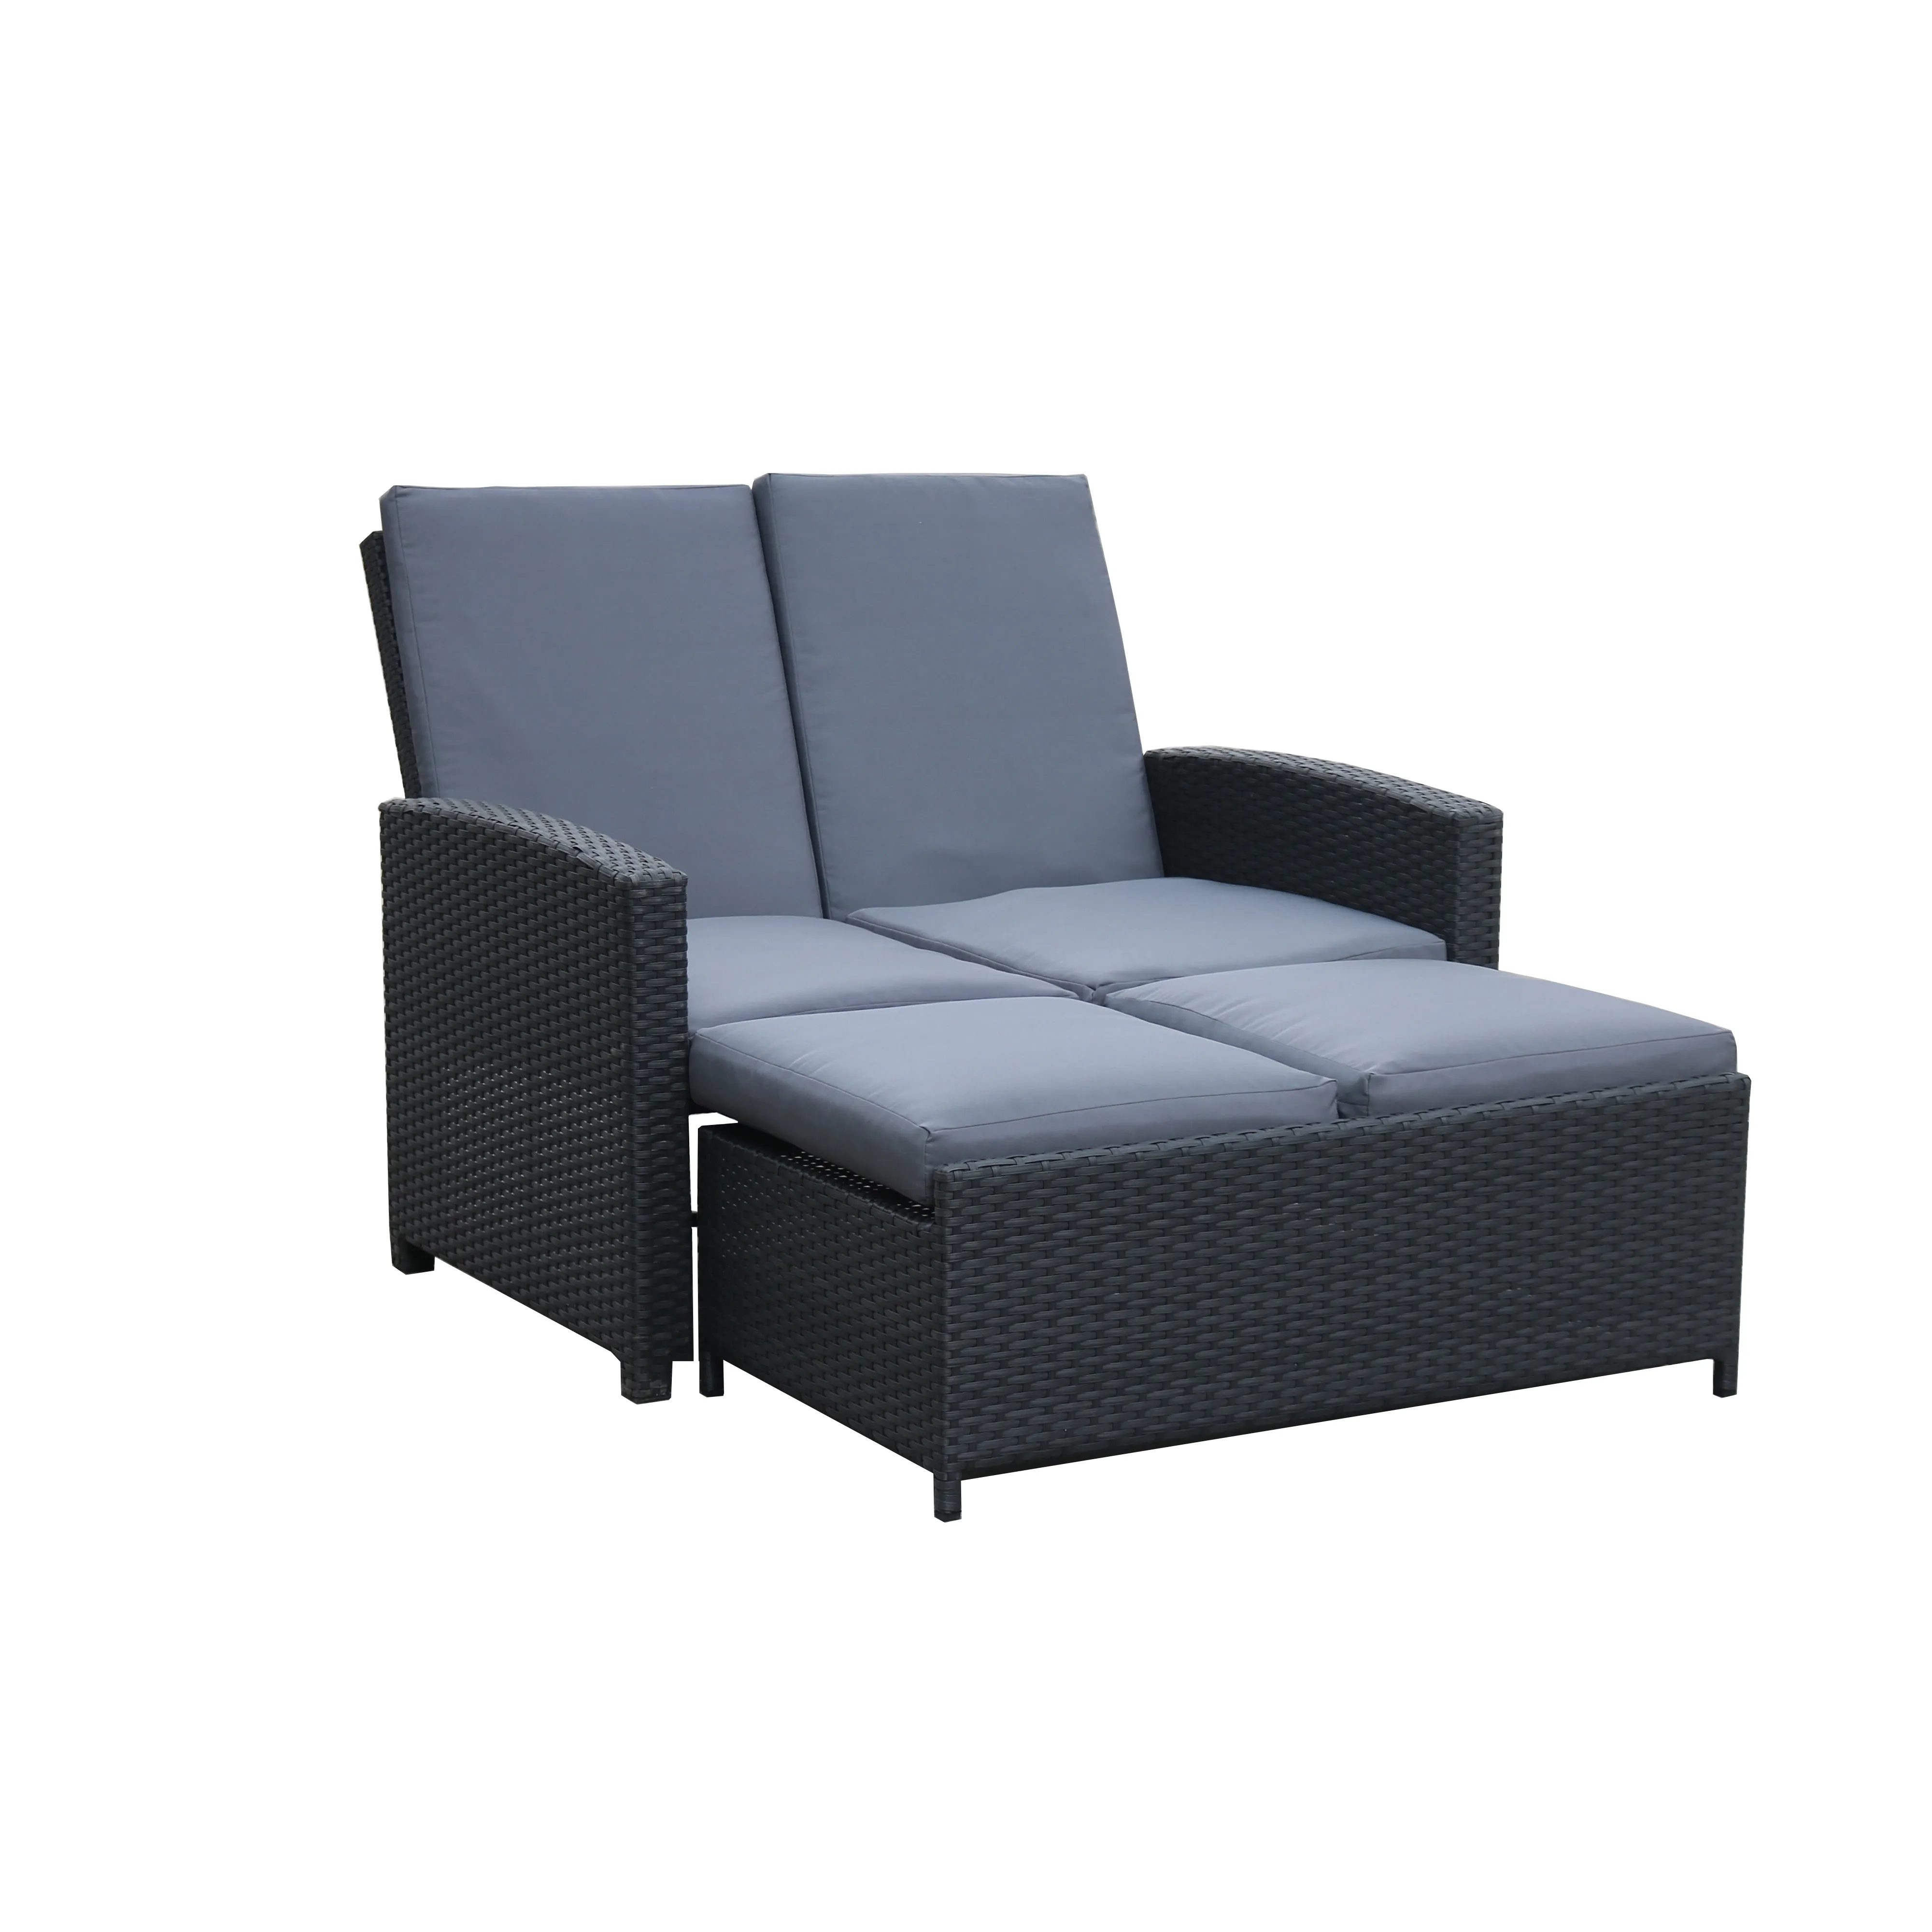 Juego de sofá seccional de aluminio moderno para exteriores YOHO, Patio de lujo, ratán, ajustable, multifuncional para entrada, comedor, Material de Bambú